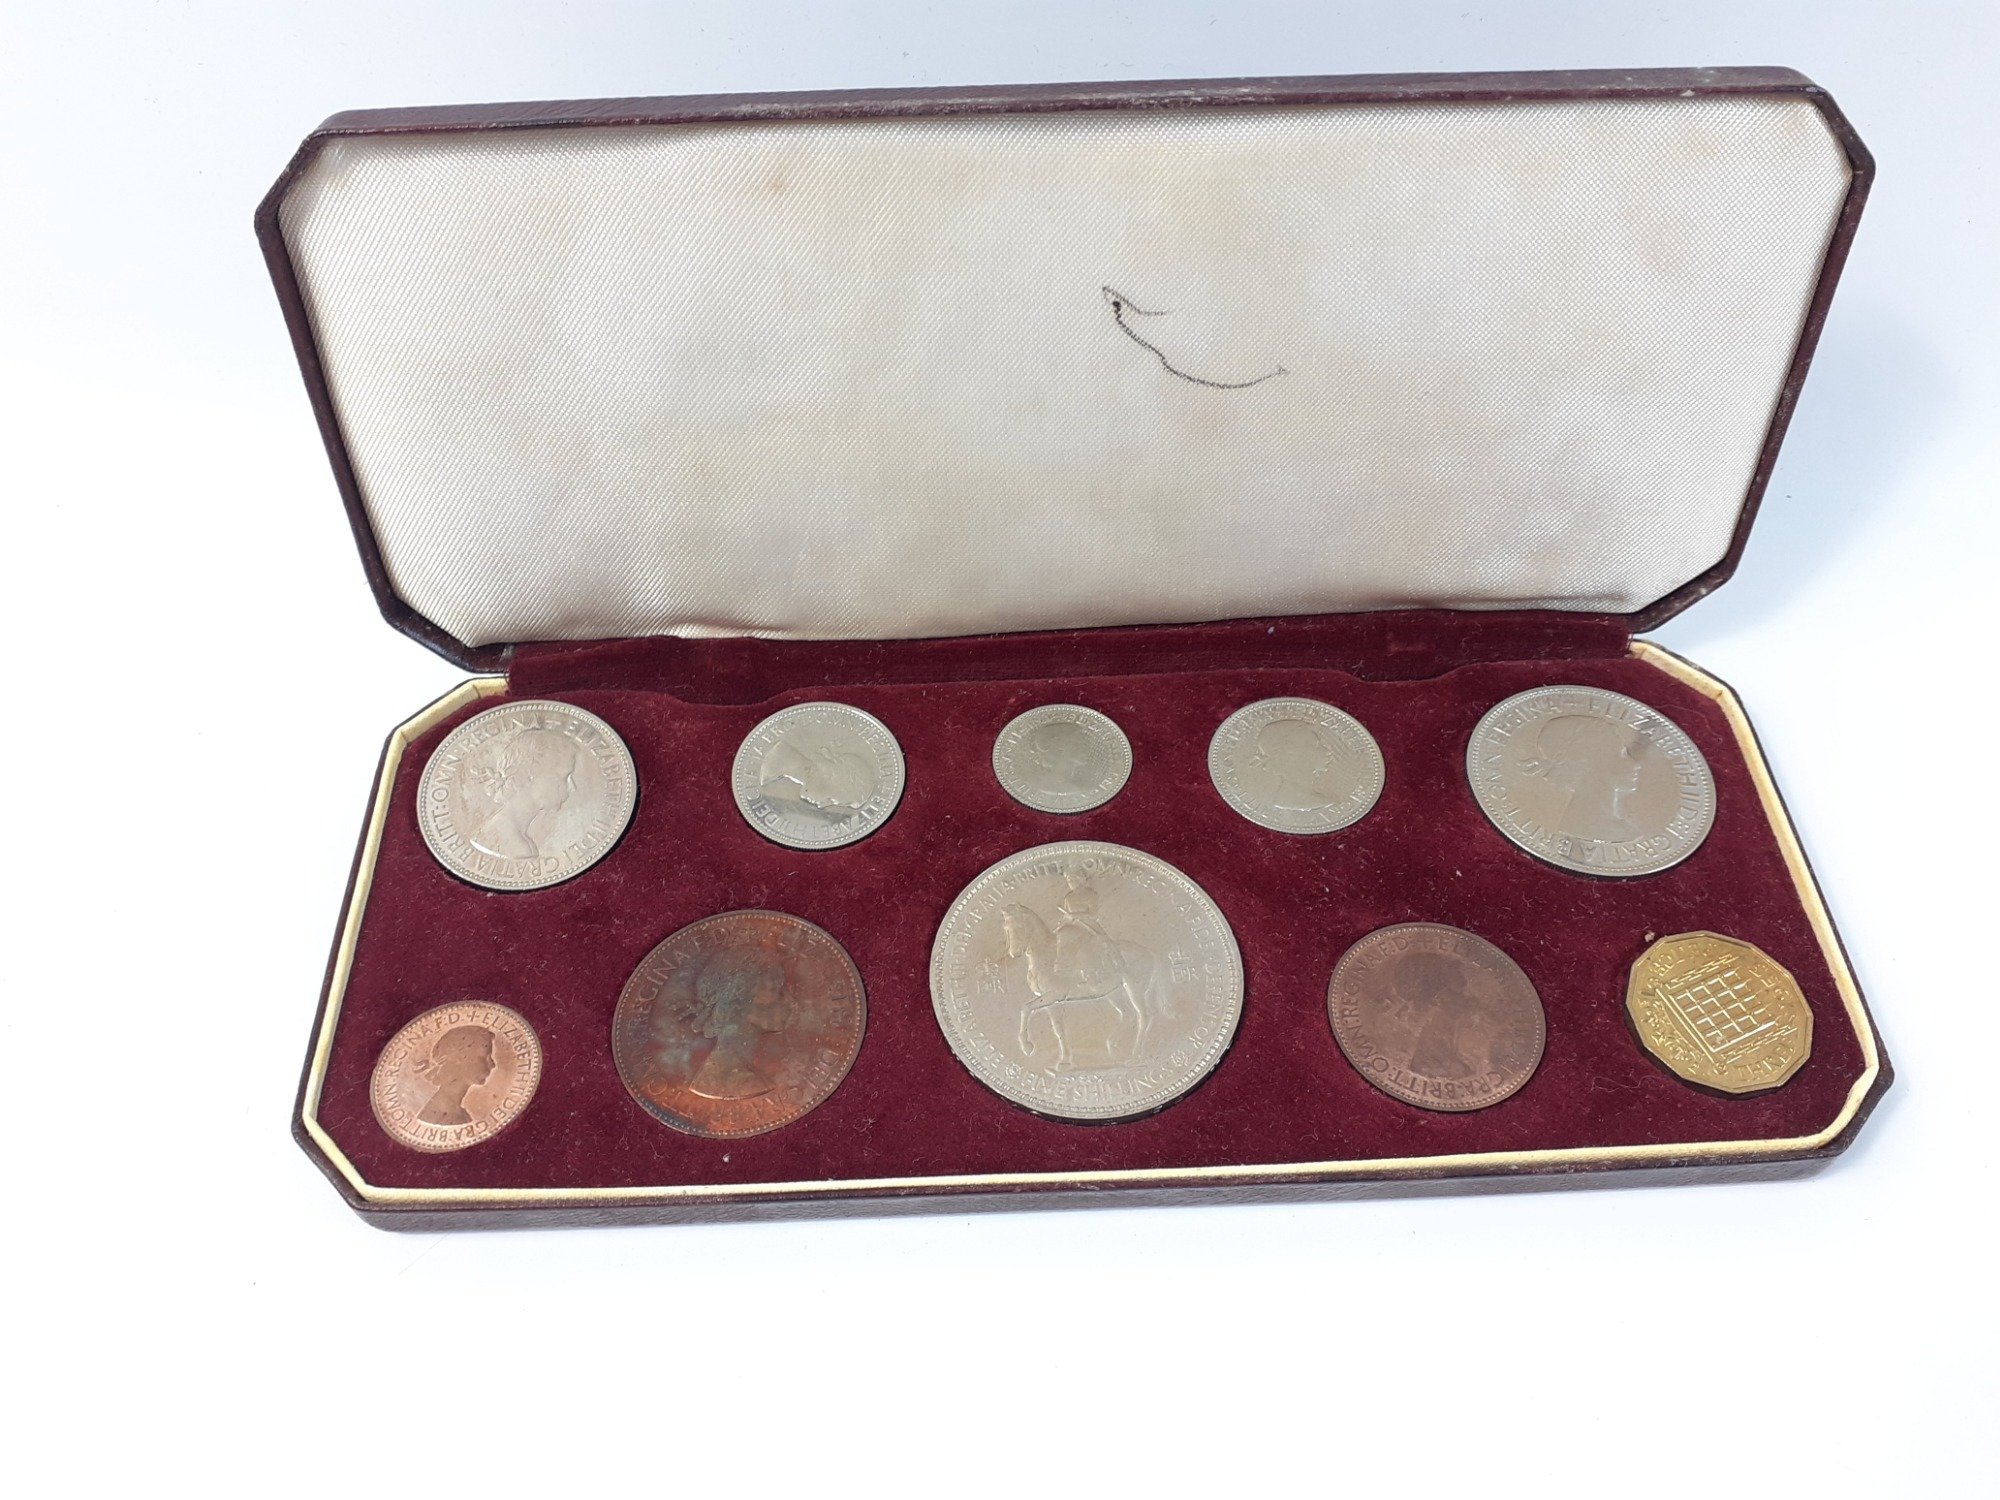 1953 Coronation Proof ten coin set in Royal Mint box